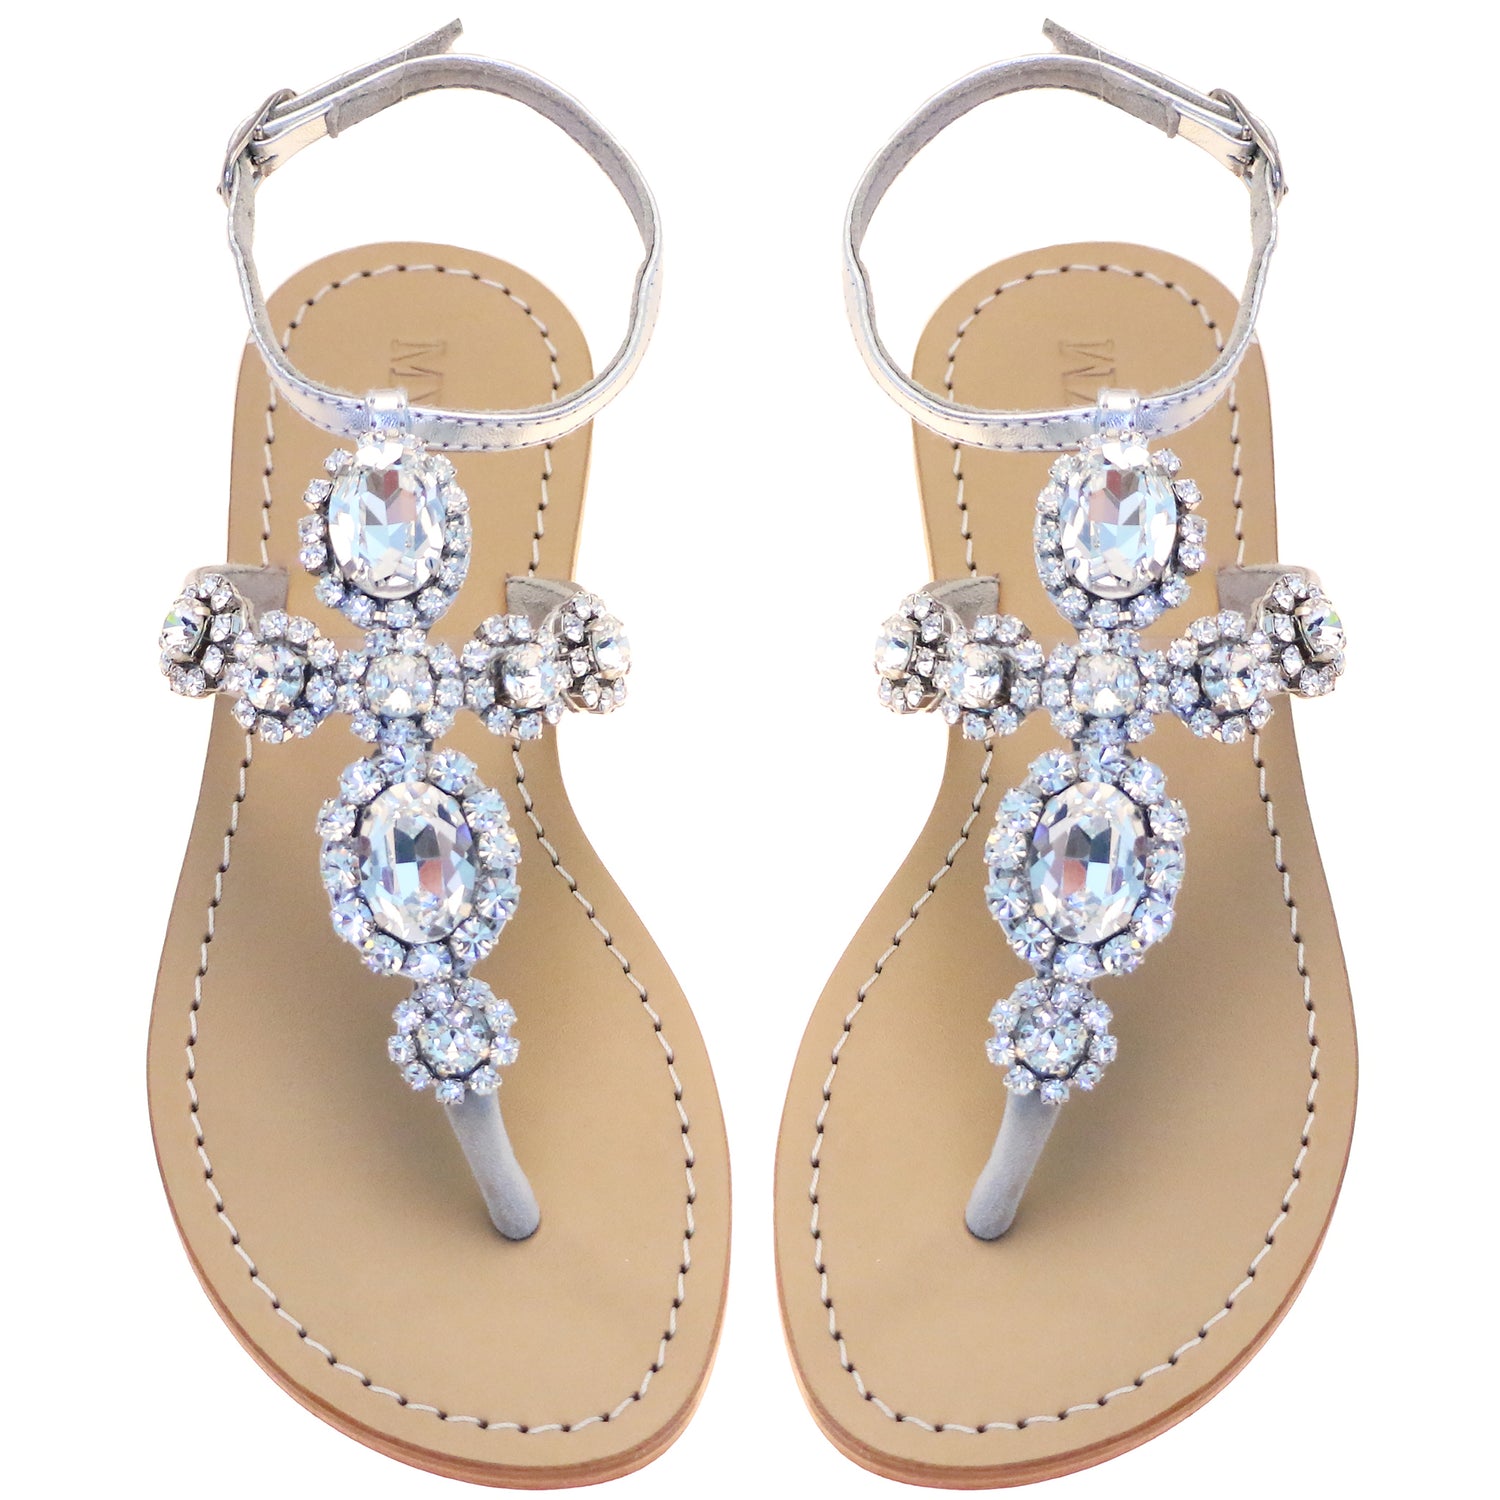 Antigua - Women's Silver Jeweled Wedding Sandals | Mystique Sandals